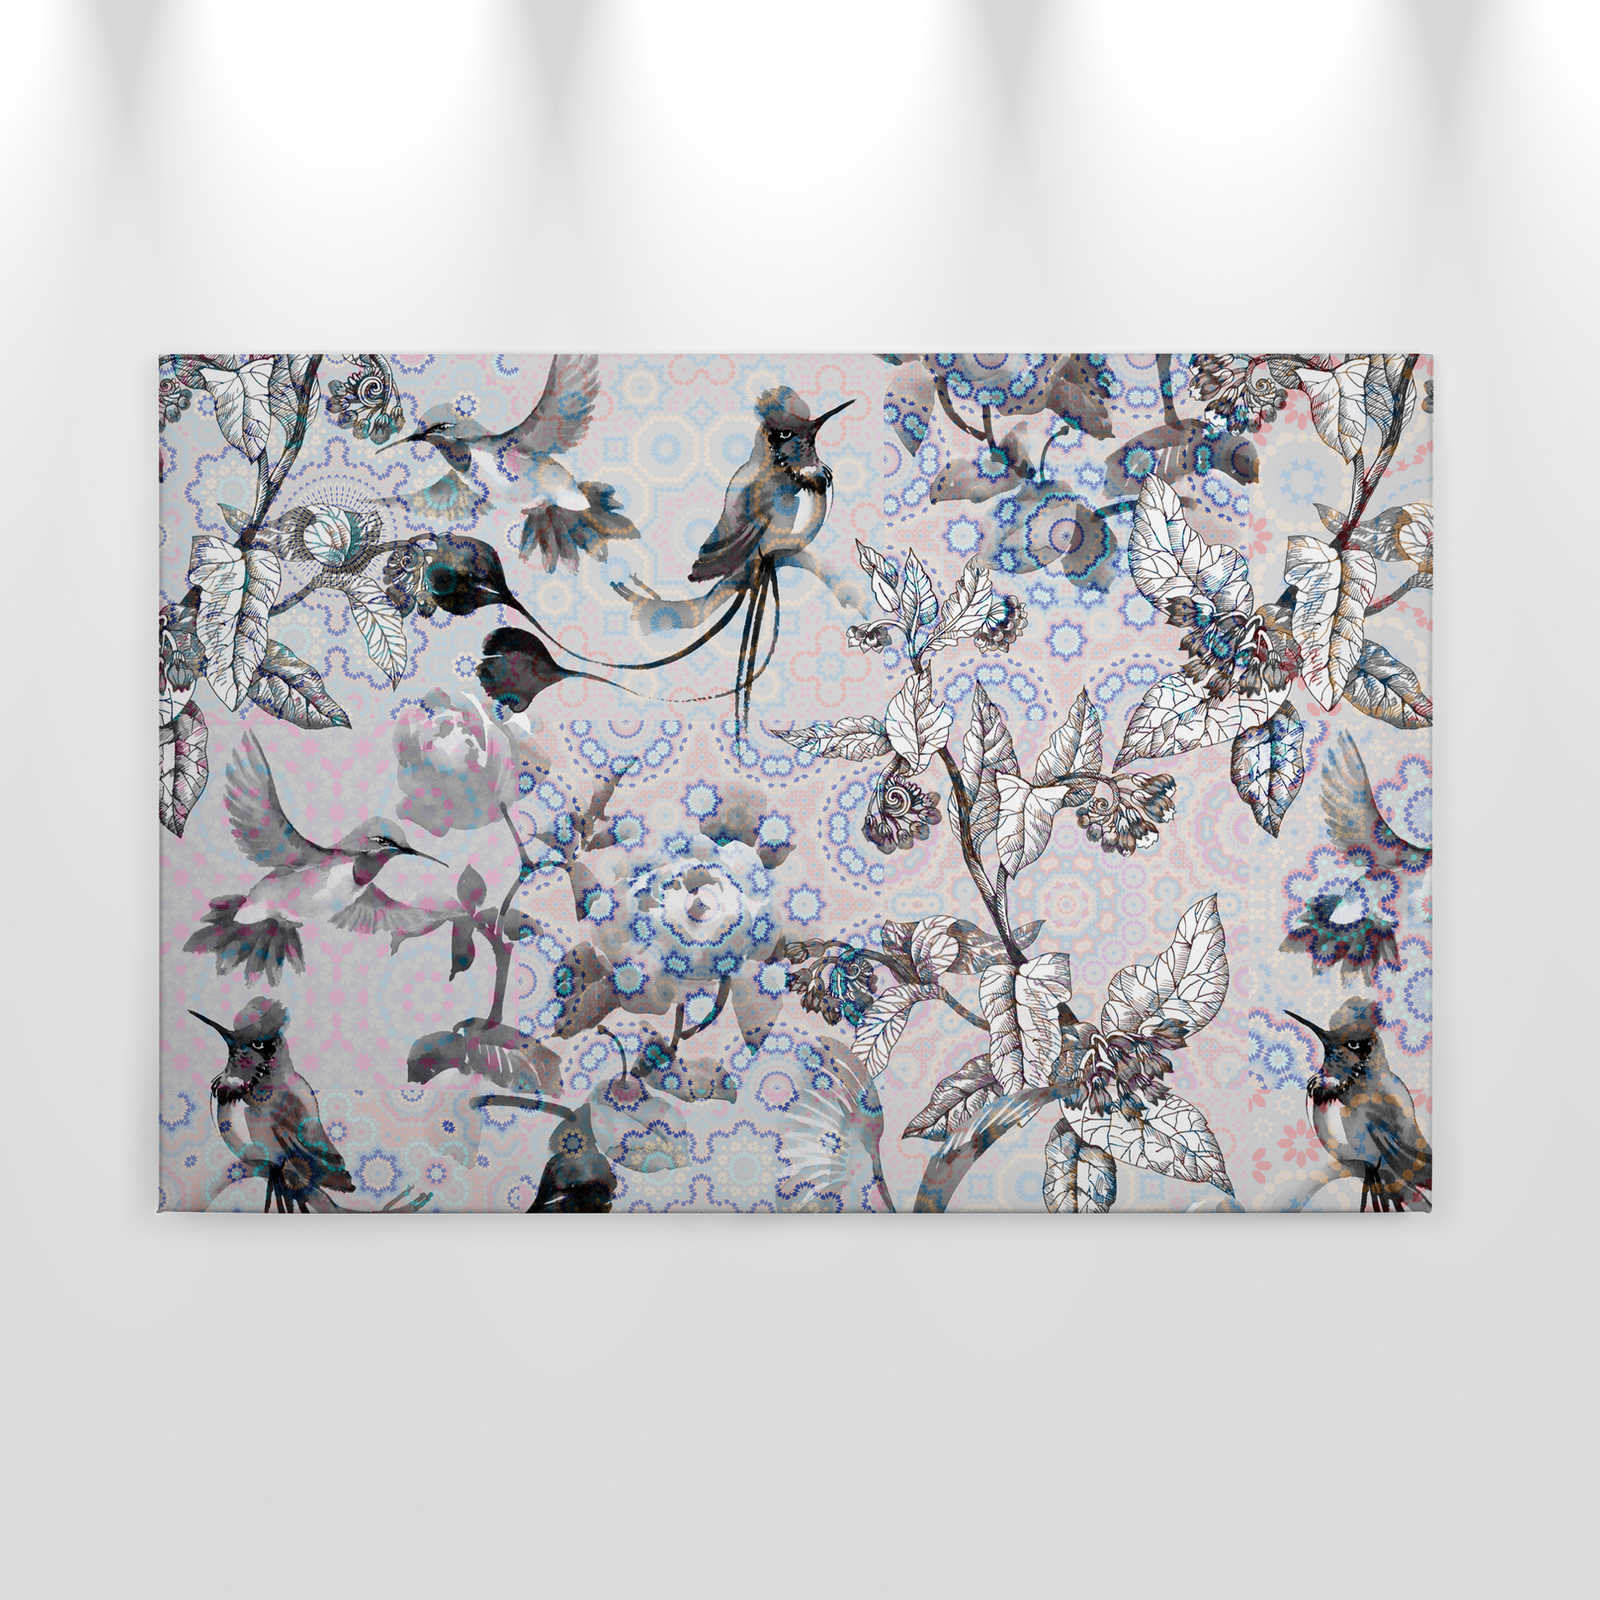             Leinwandbild Natur Design im Collage Stil | exotic mosaic 3 – 0,90 m x 0,60 m
        